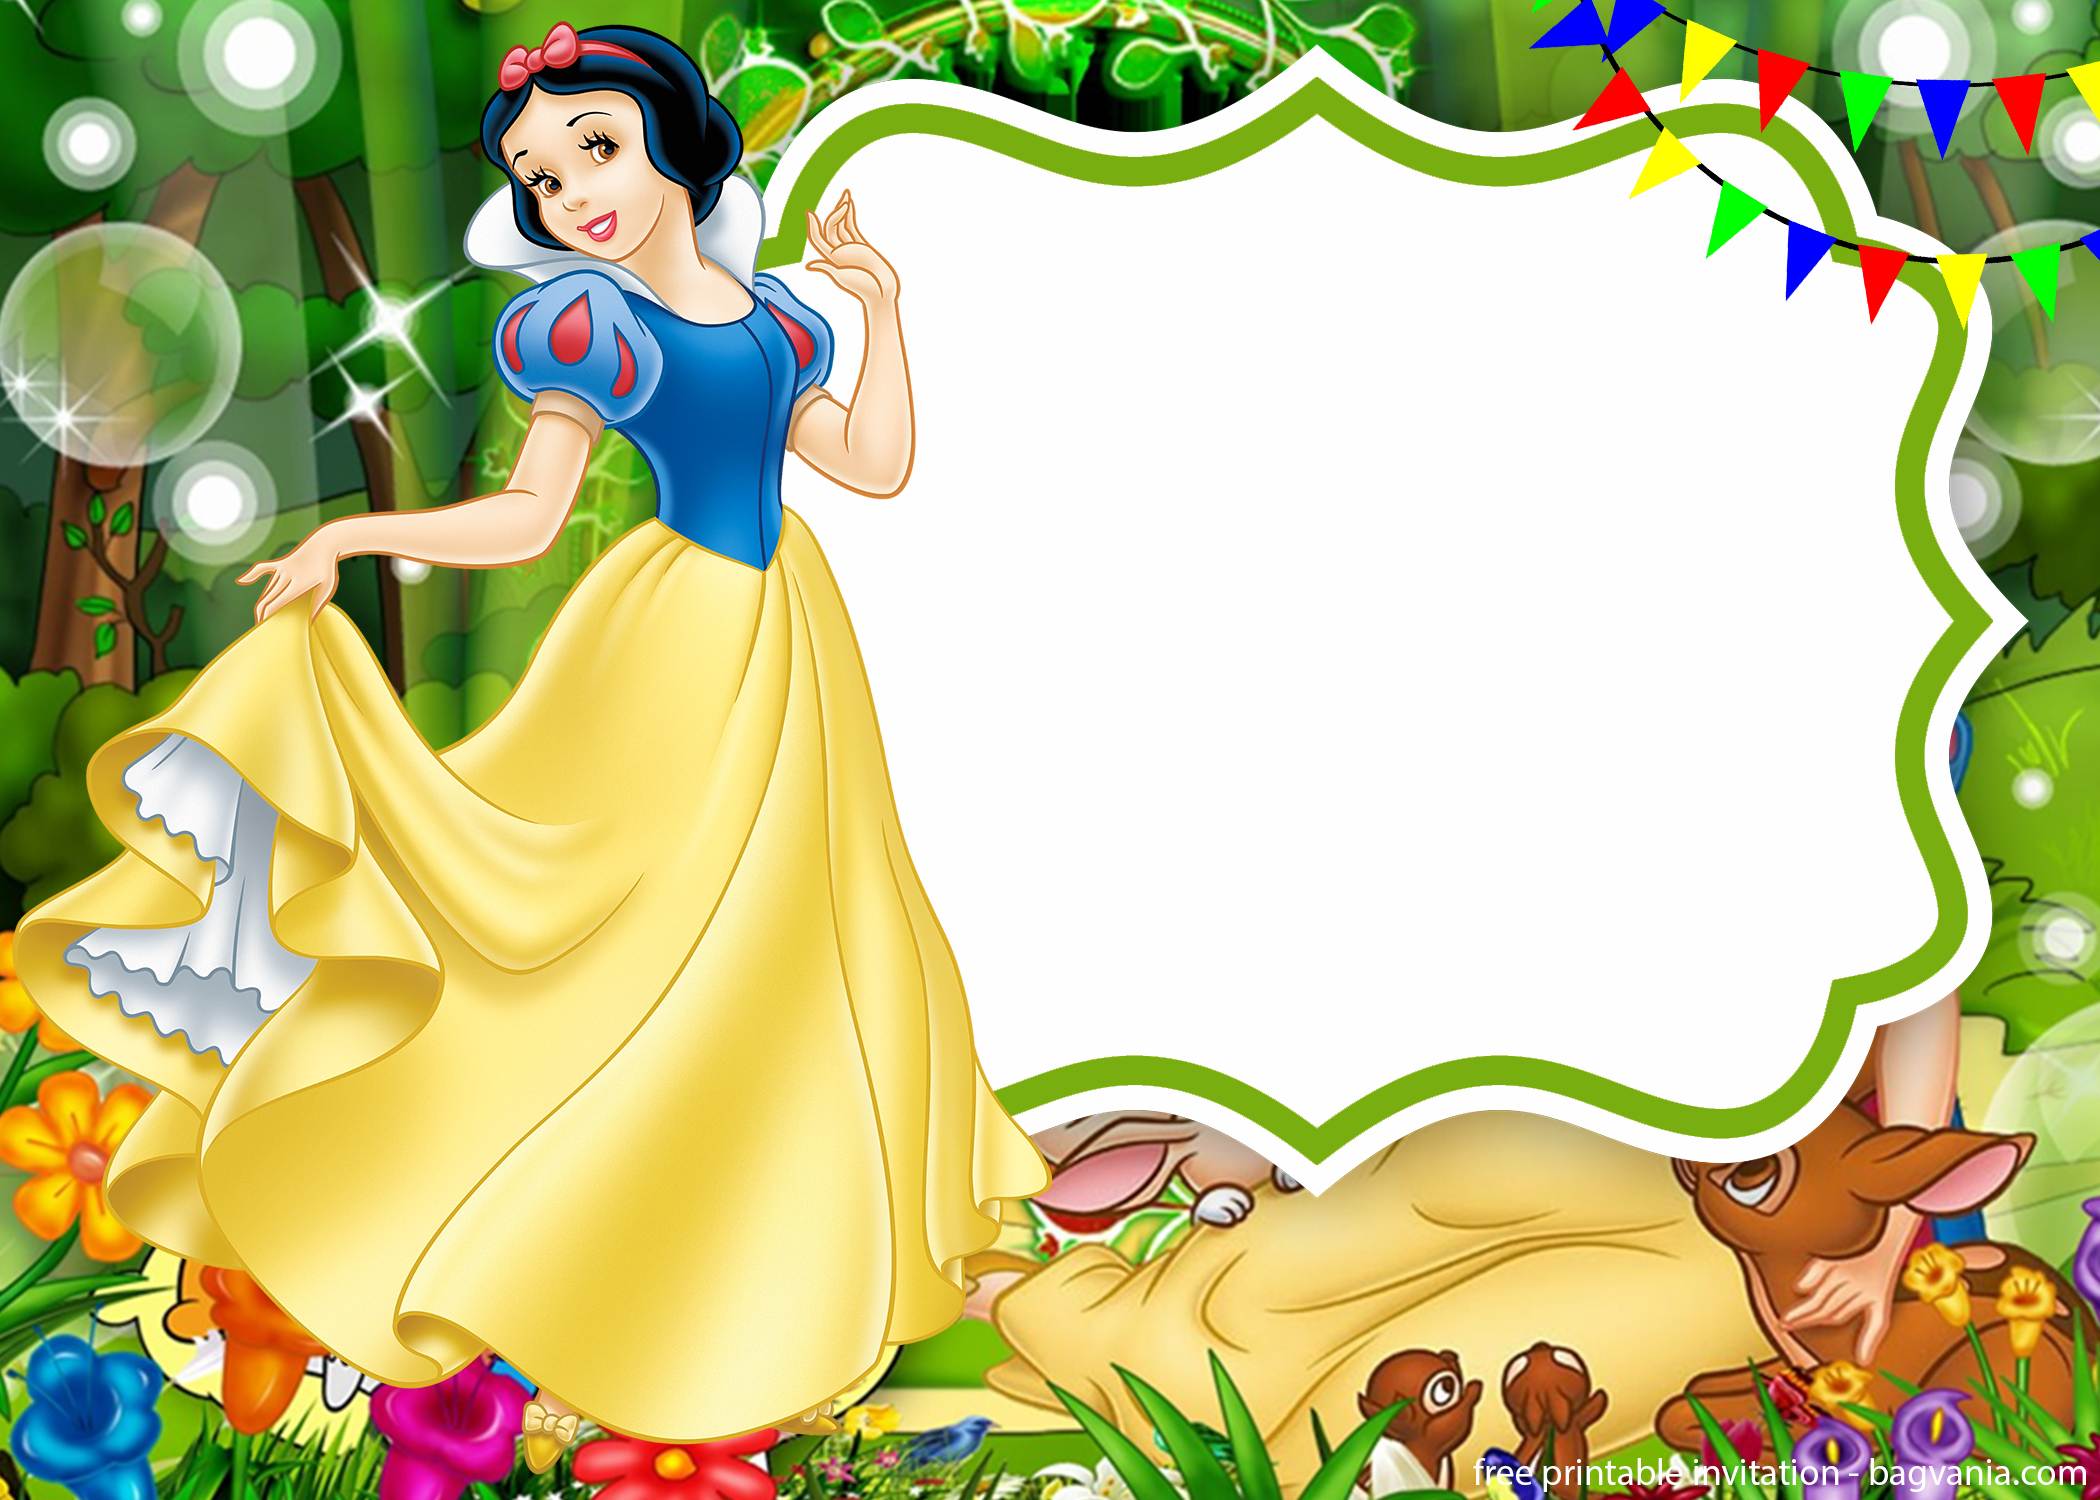 Snow White & Seven Dwarfs Invitations Templates FREE Printable